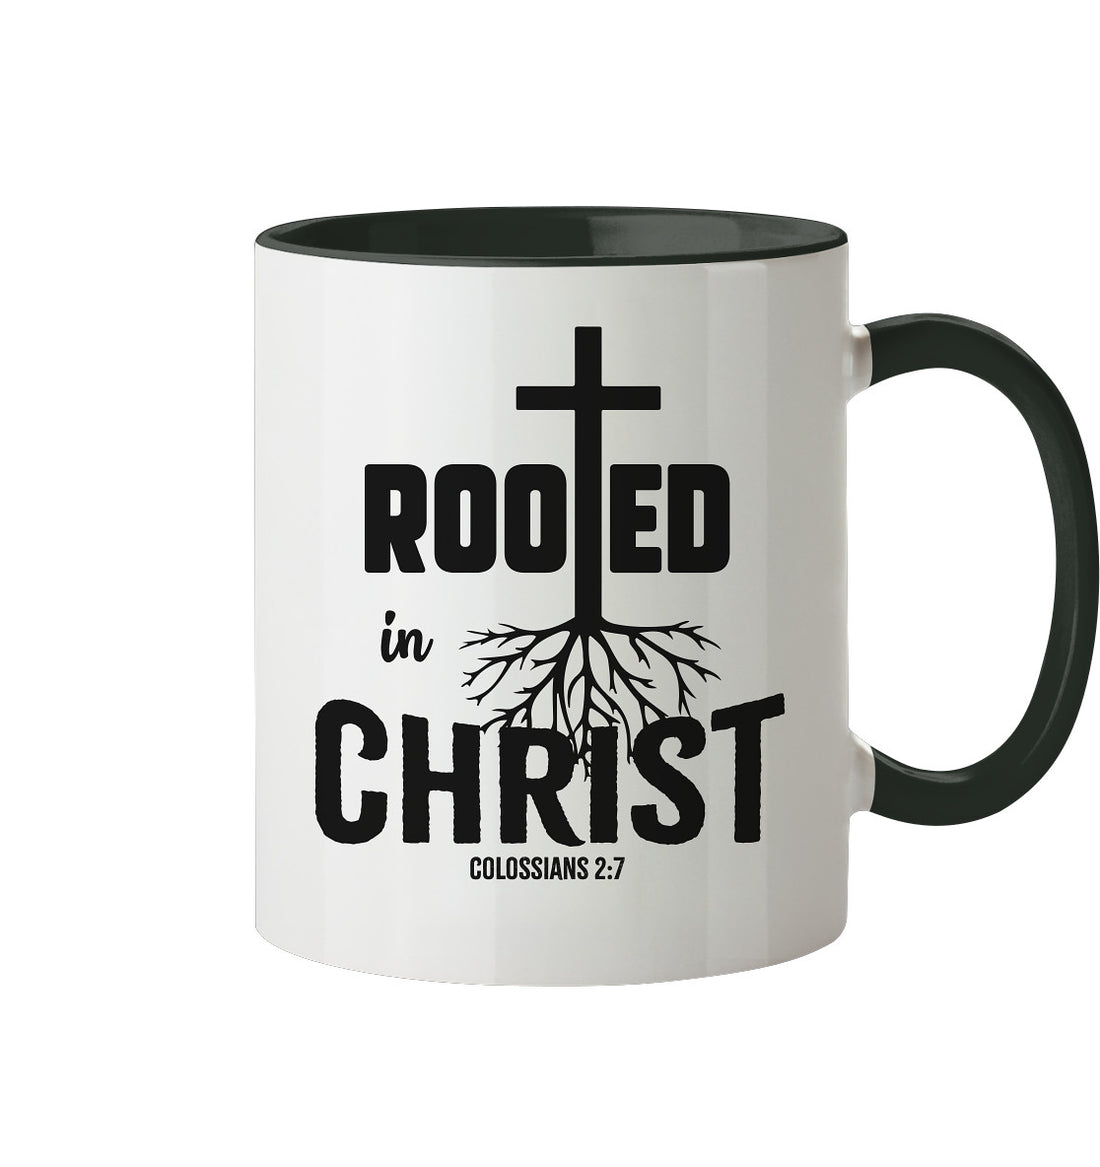 Kol 2,7 - Rooted in Christ - Tasse zweifarbig